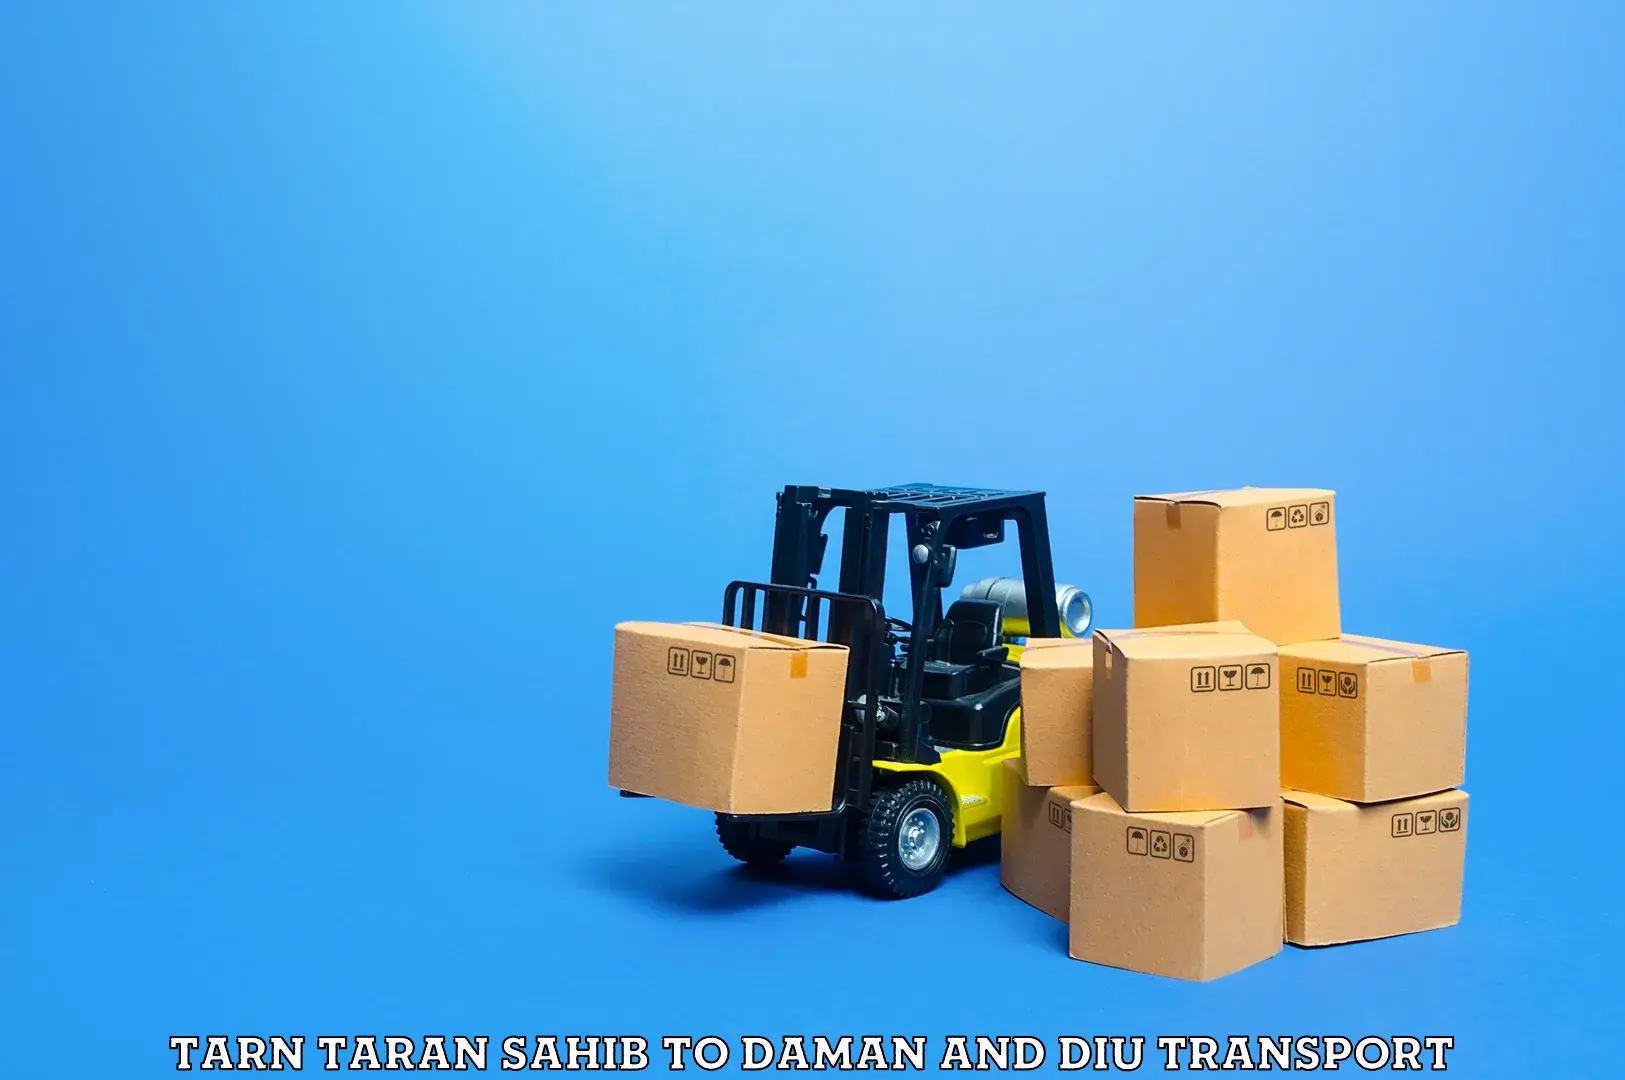 Container transport service Tarn Taran Sahib to Diu